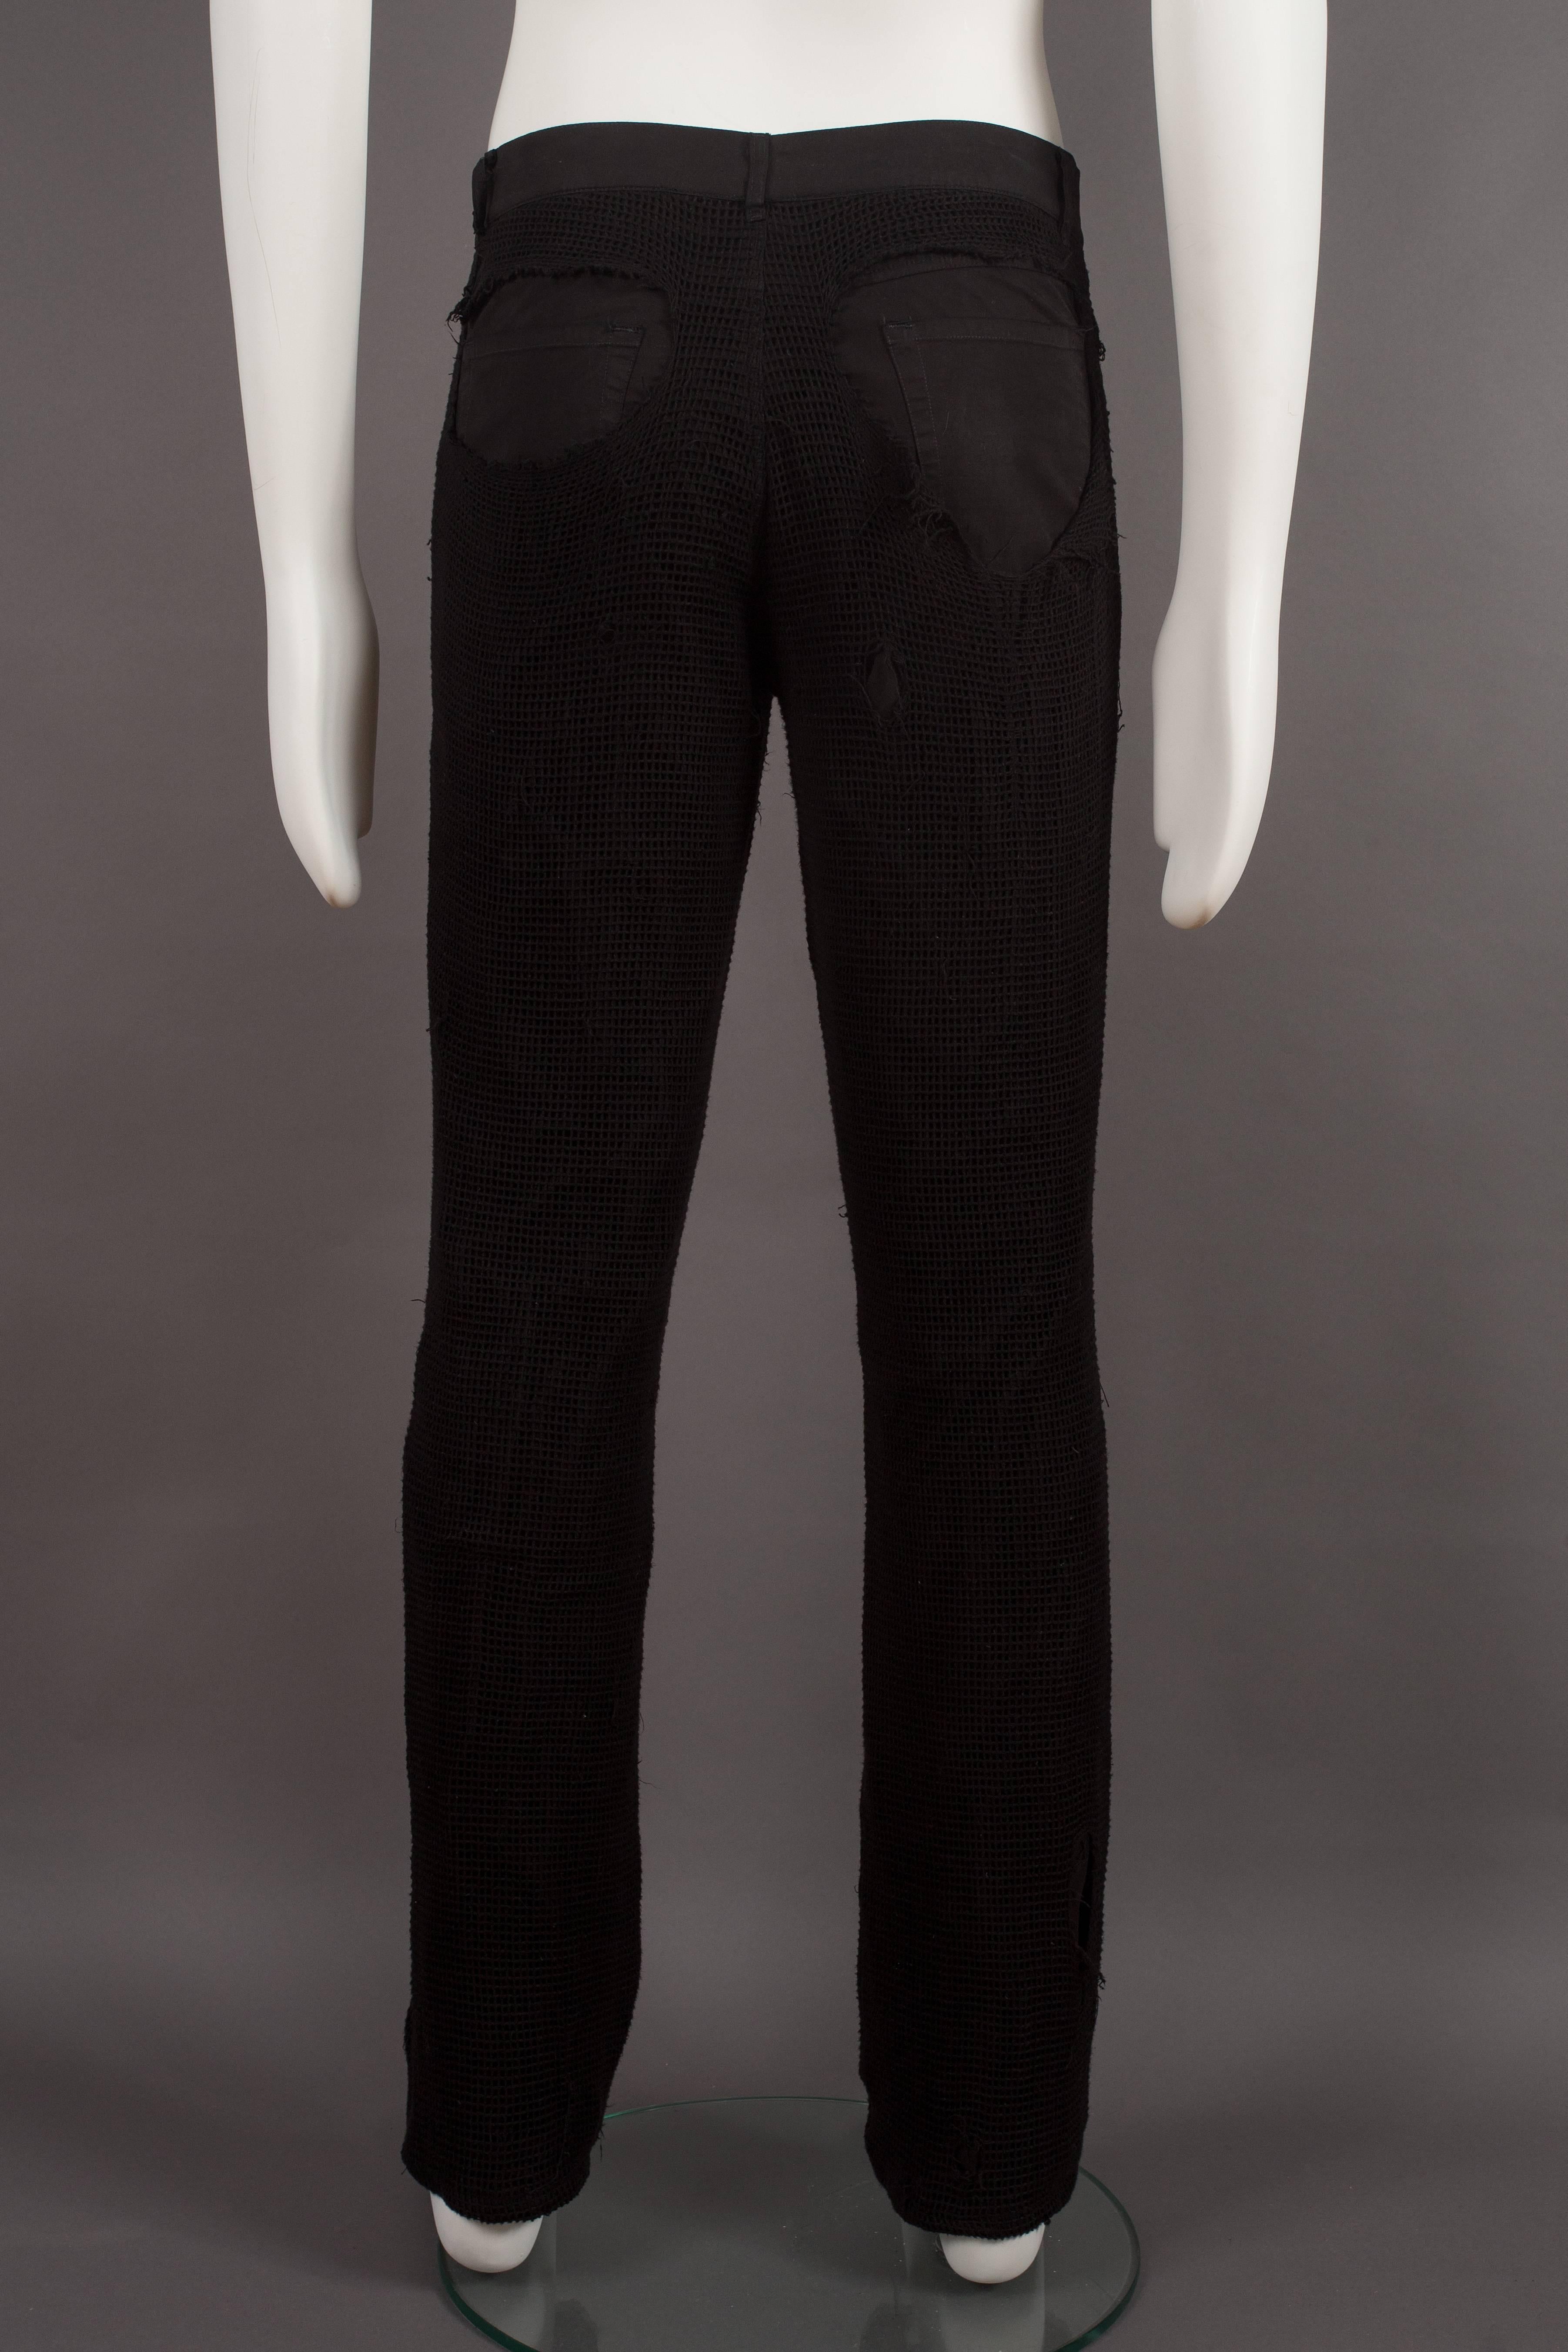 Black Raf Simons 'CONSUMED' black net jean pants, circa 2003